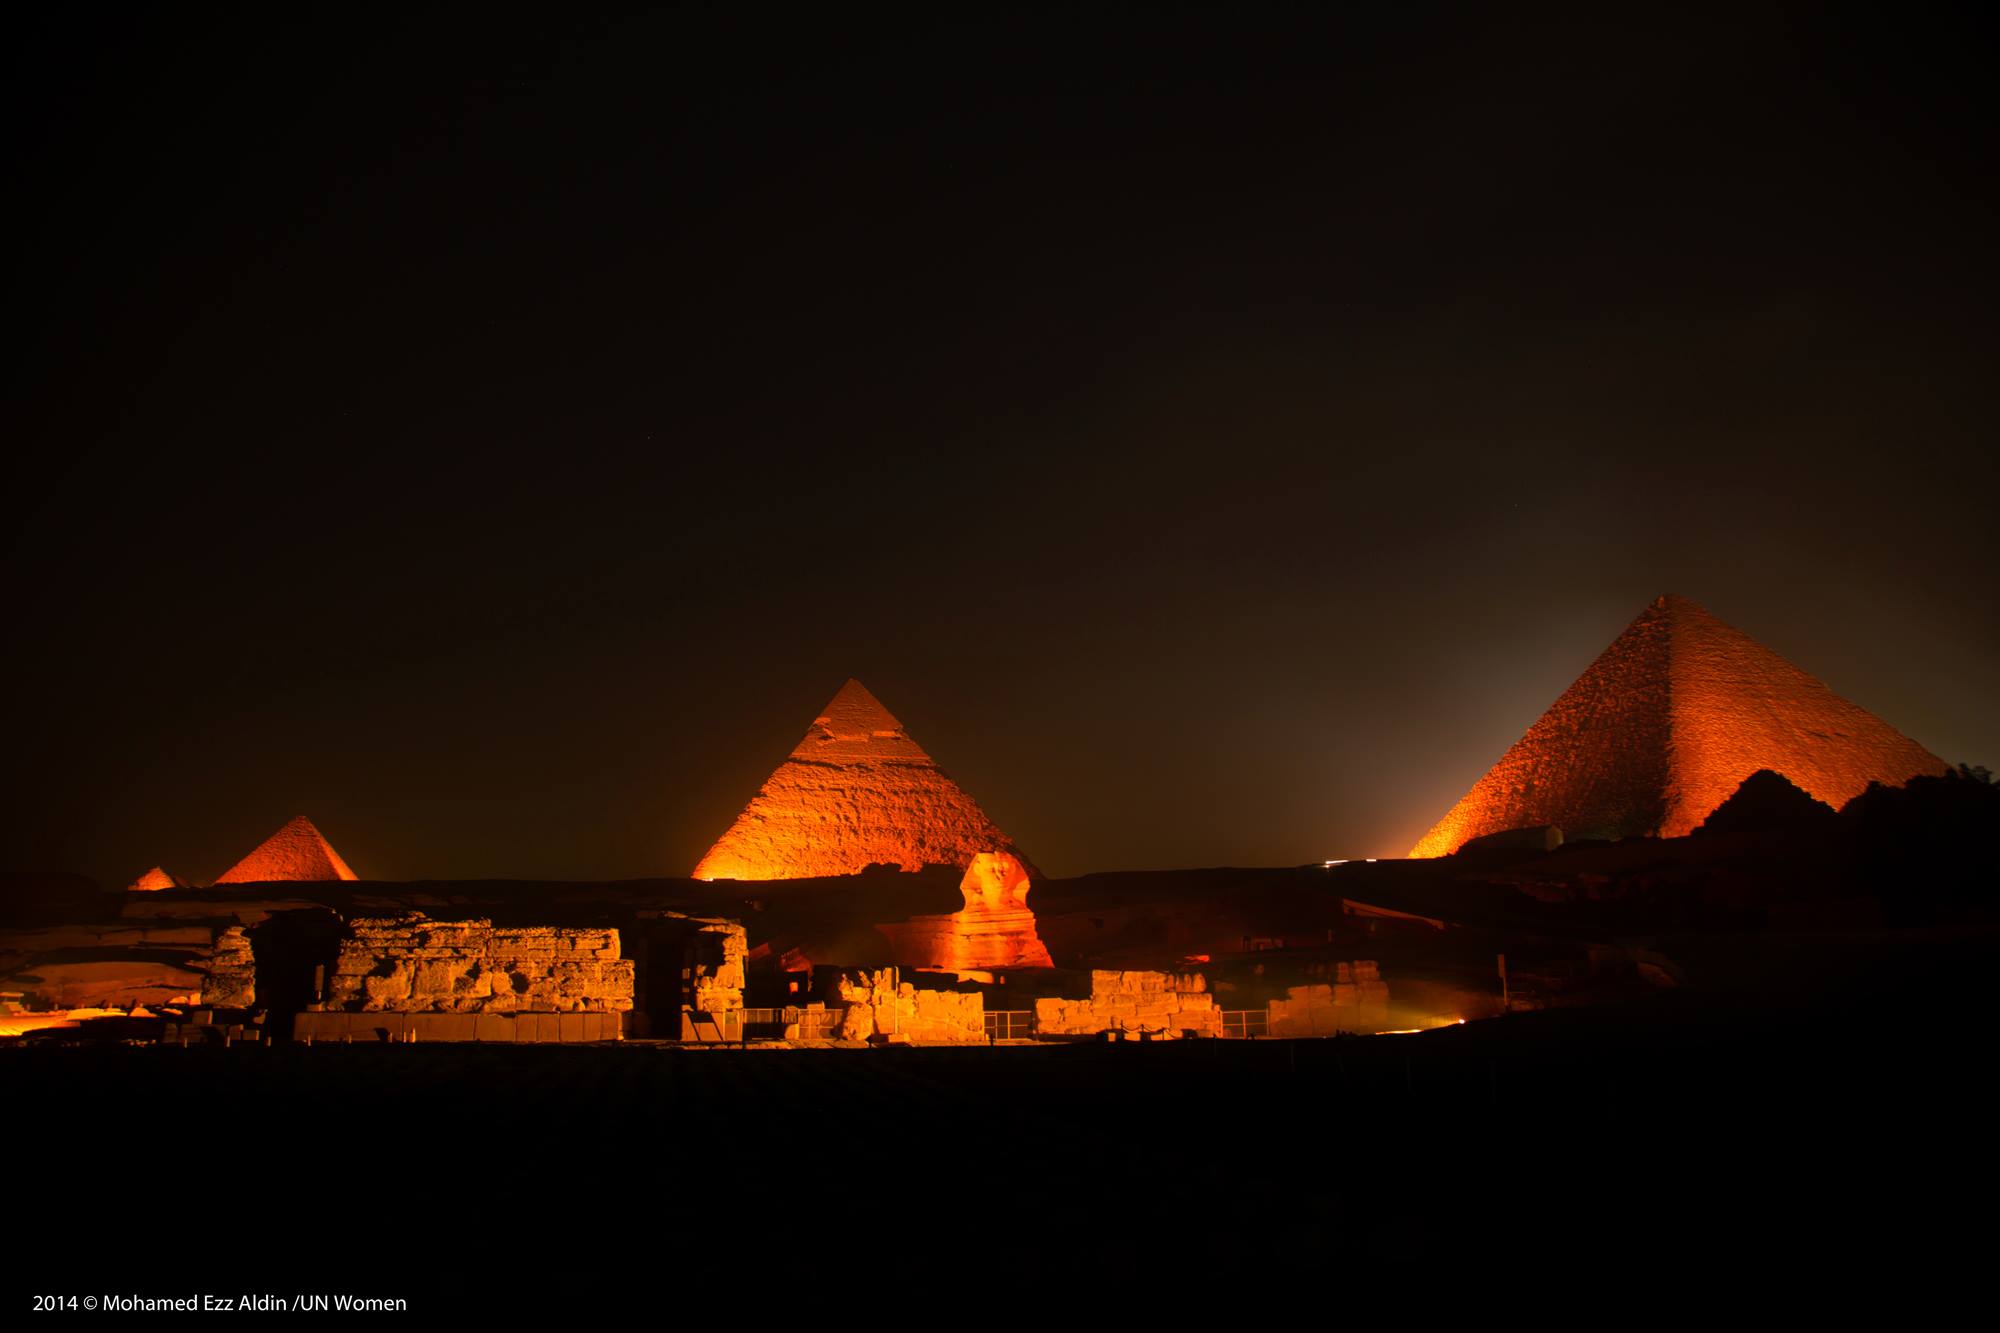 2 Egyptian policemen killed near the Giza Pyramids - police official